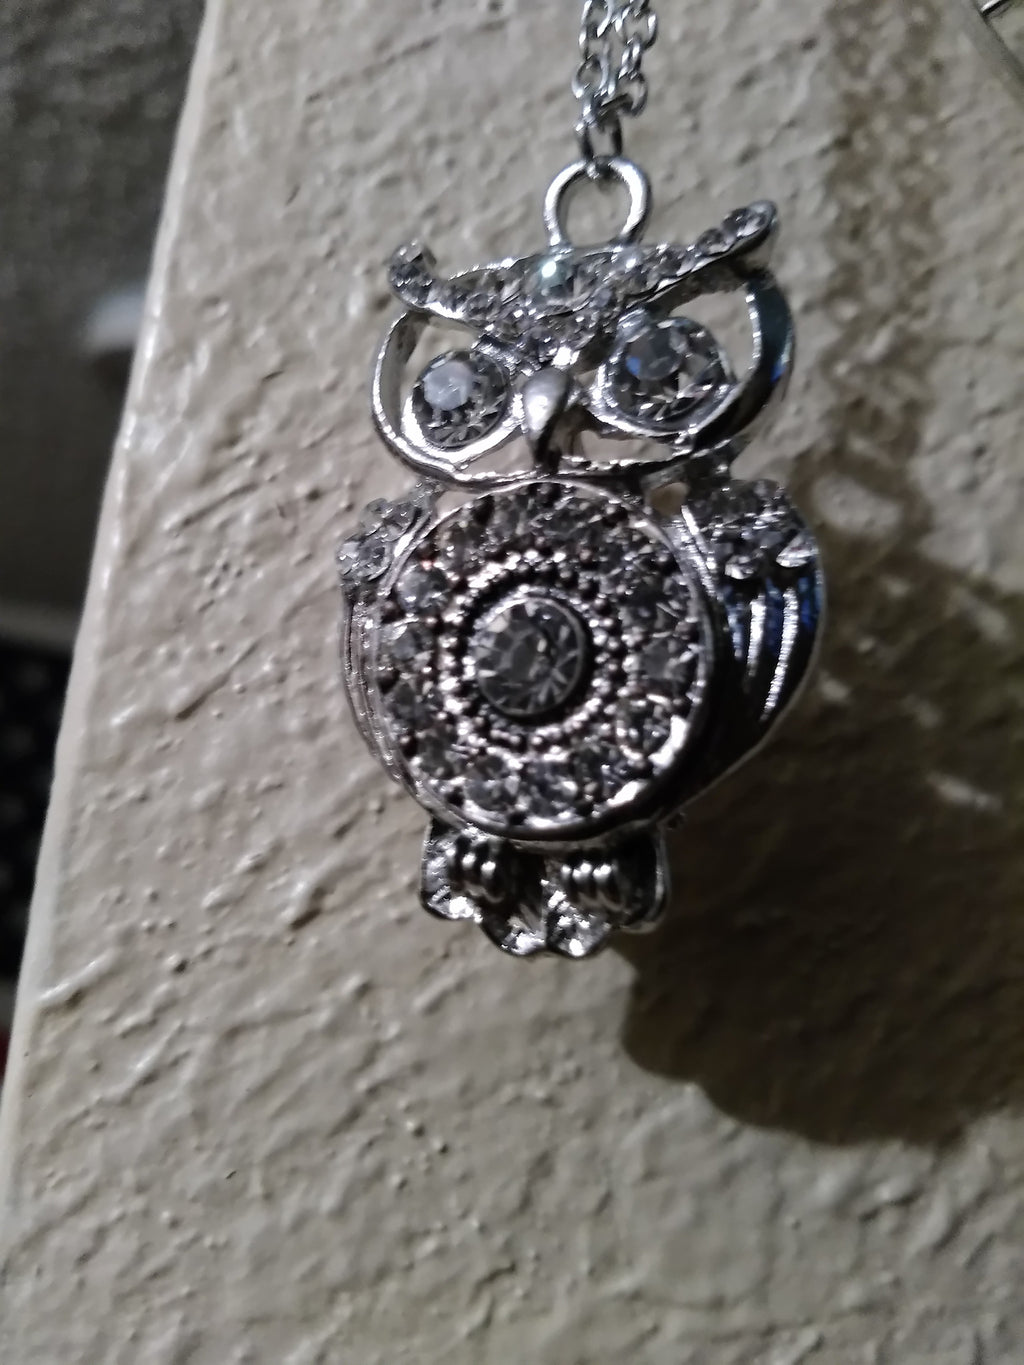 Hot 🔥 new snap jewelry owl pendant